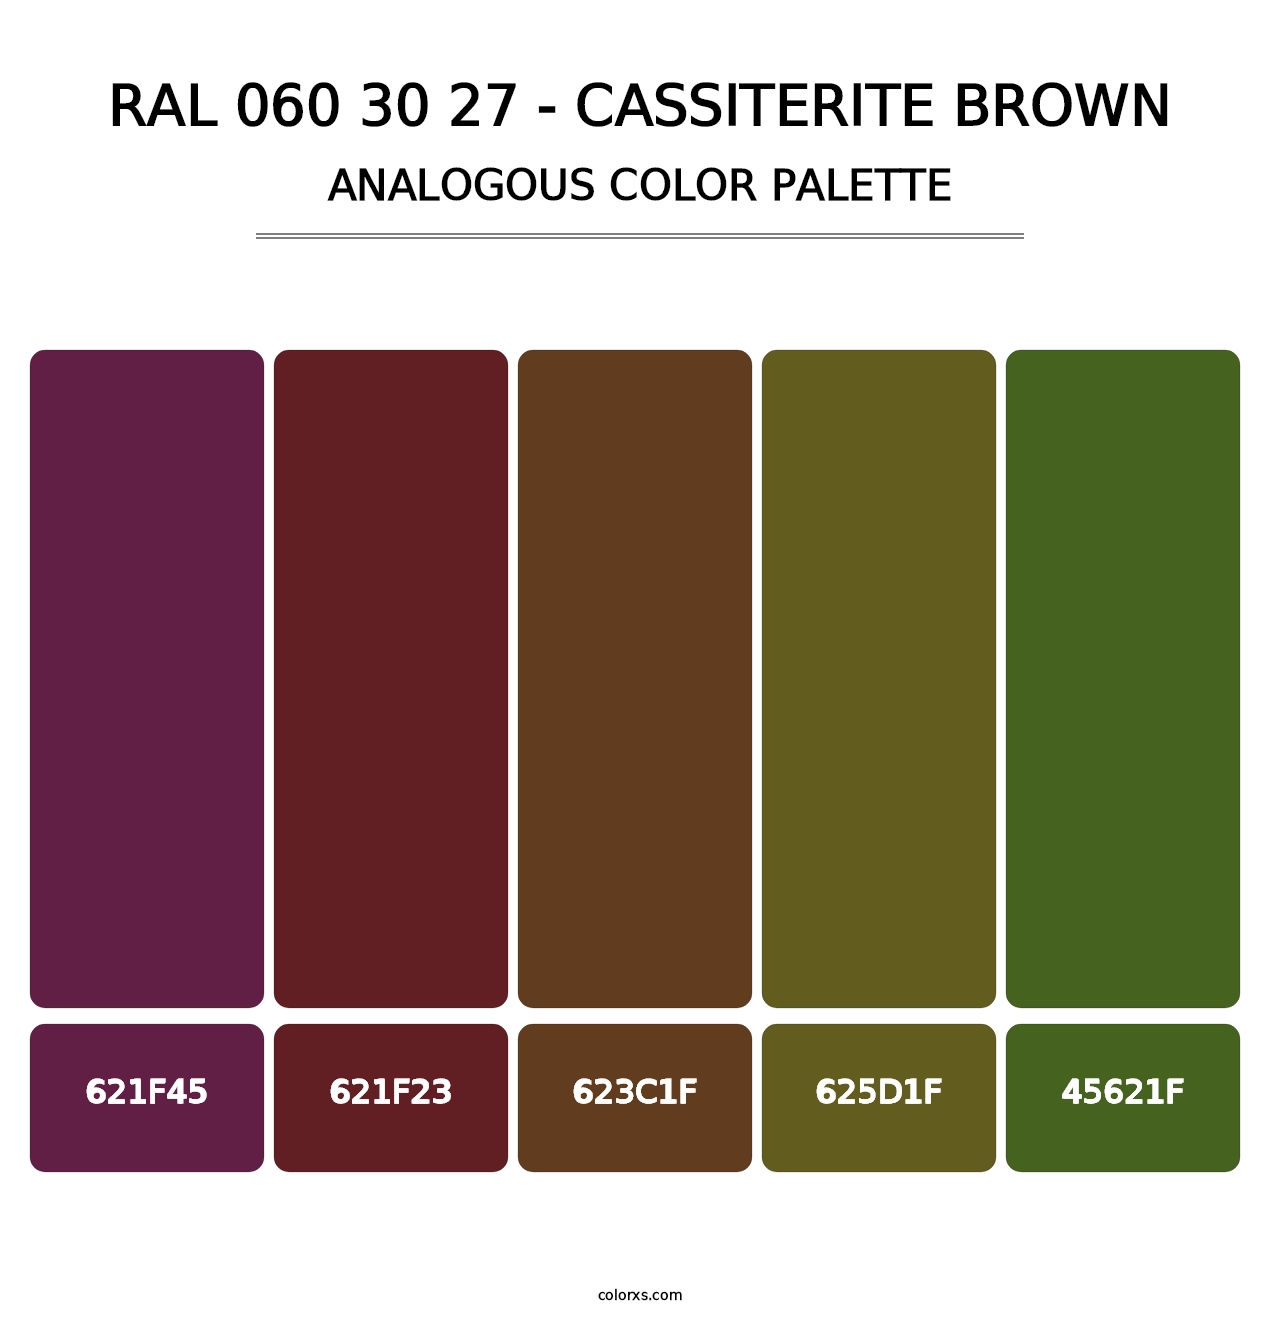 RAL 060 30 27 - Cassiterite Brown - Analogous Color Palette